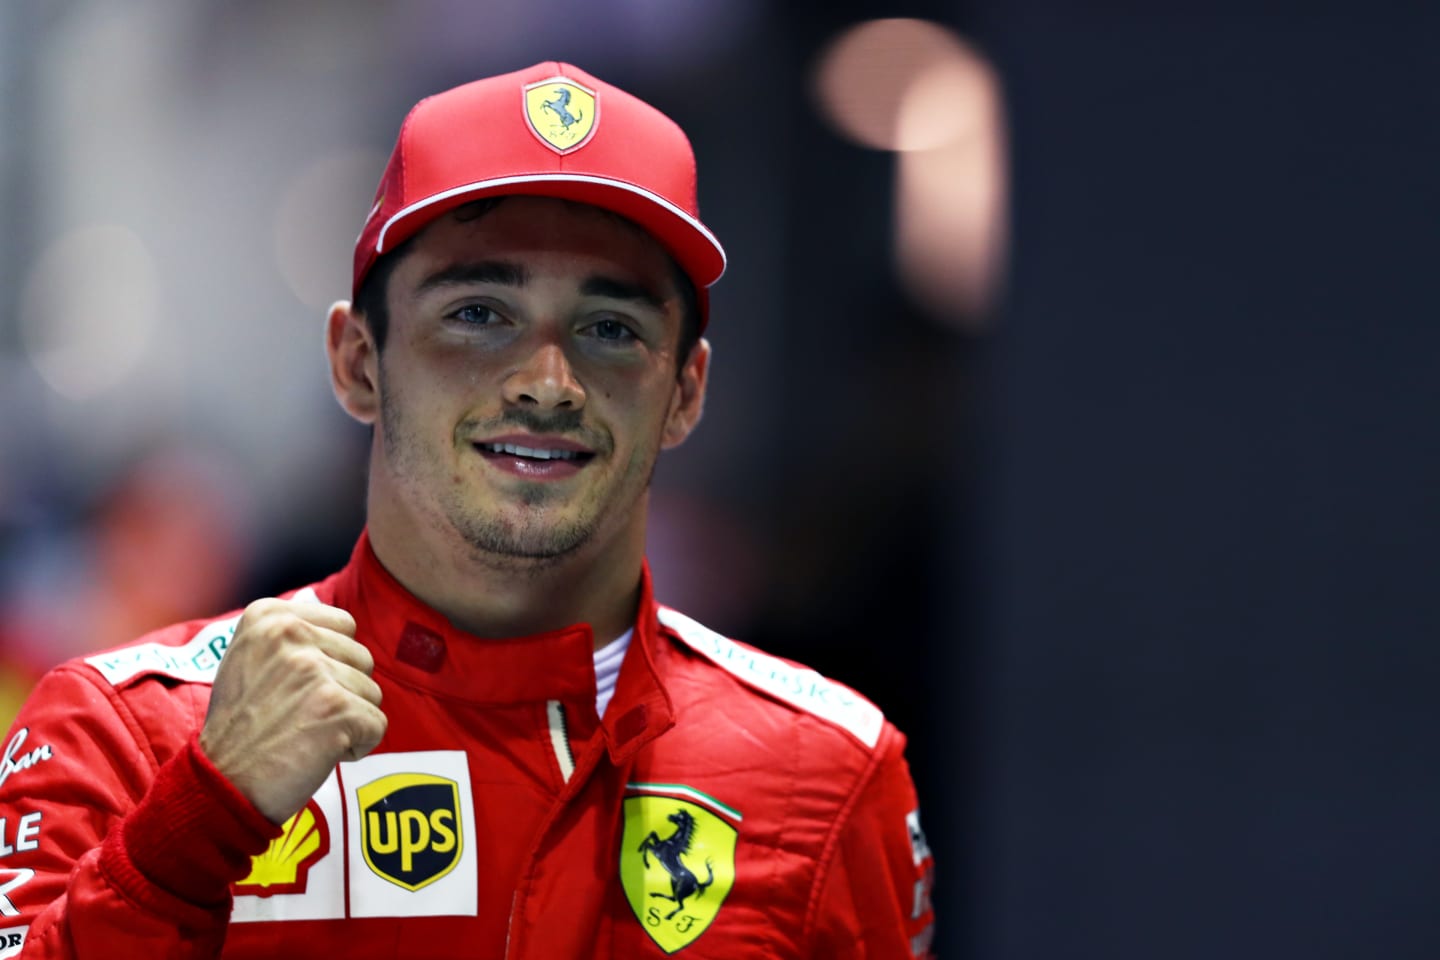 SINGAPORE, SINGAPORE - SEPTEMBER 21: Pole position qualifier Charles Leclerc of Monaco and Ferrari